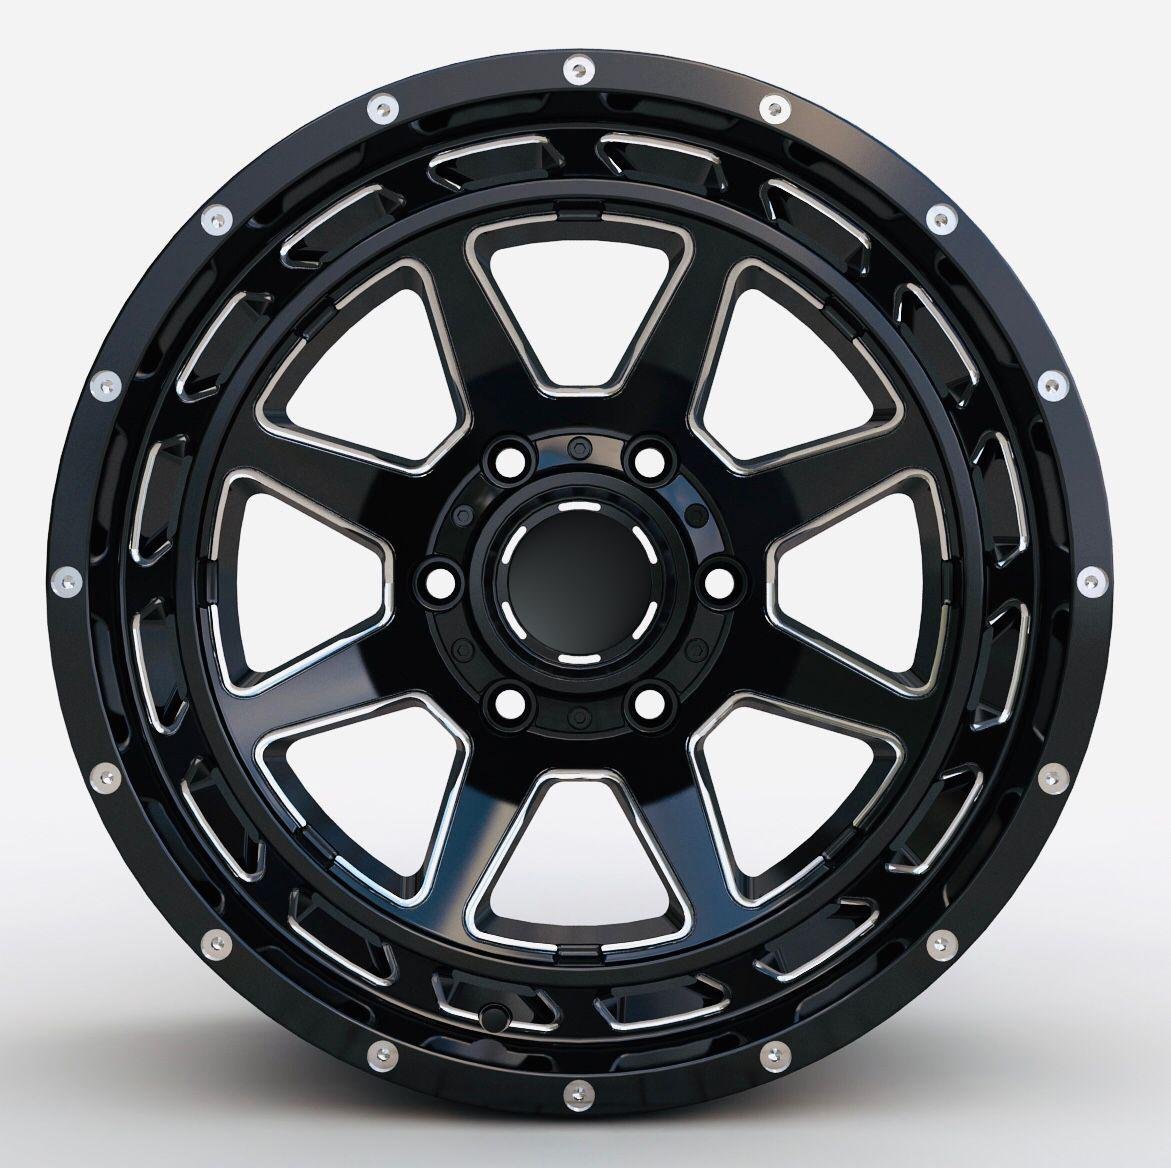 Aluminum Alloy Wheels-6x139.7